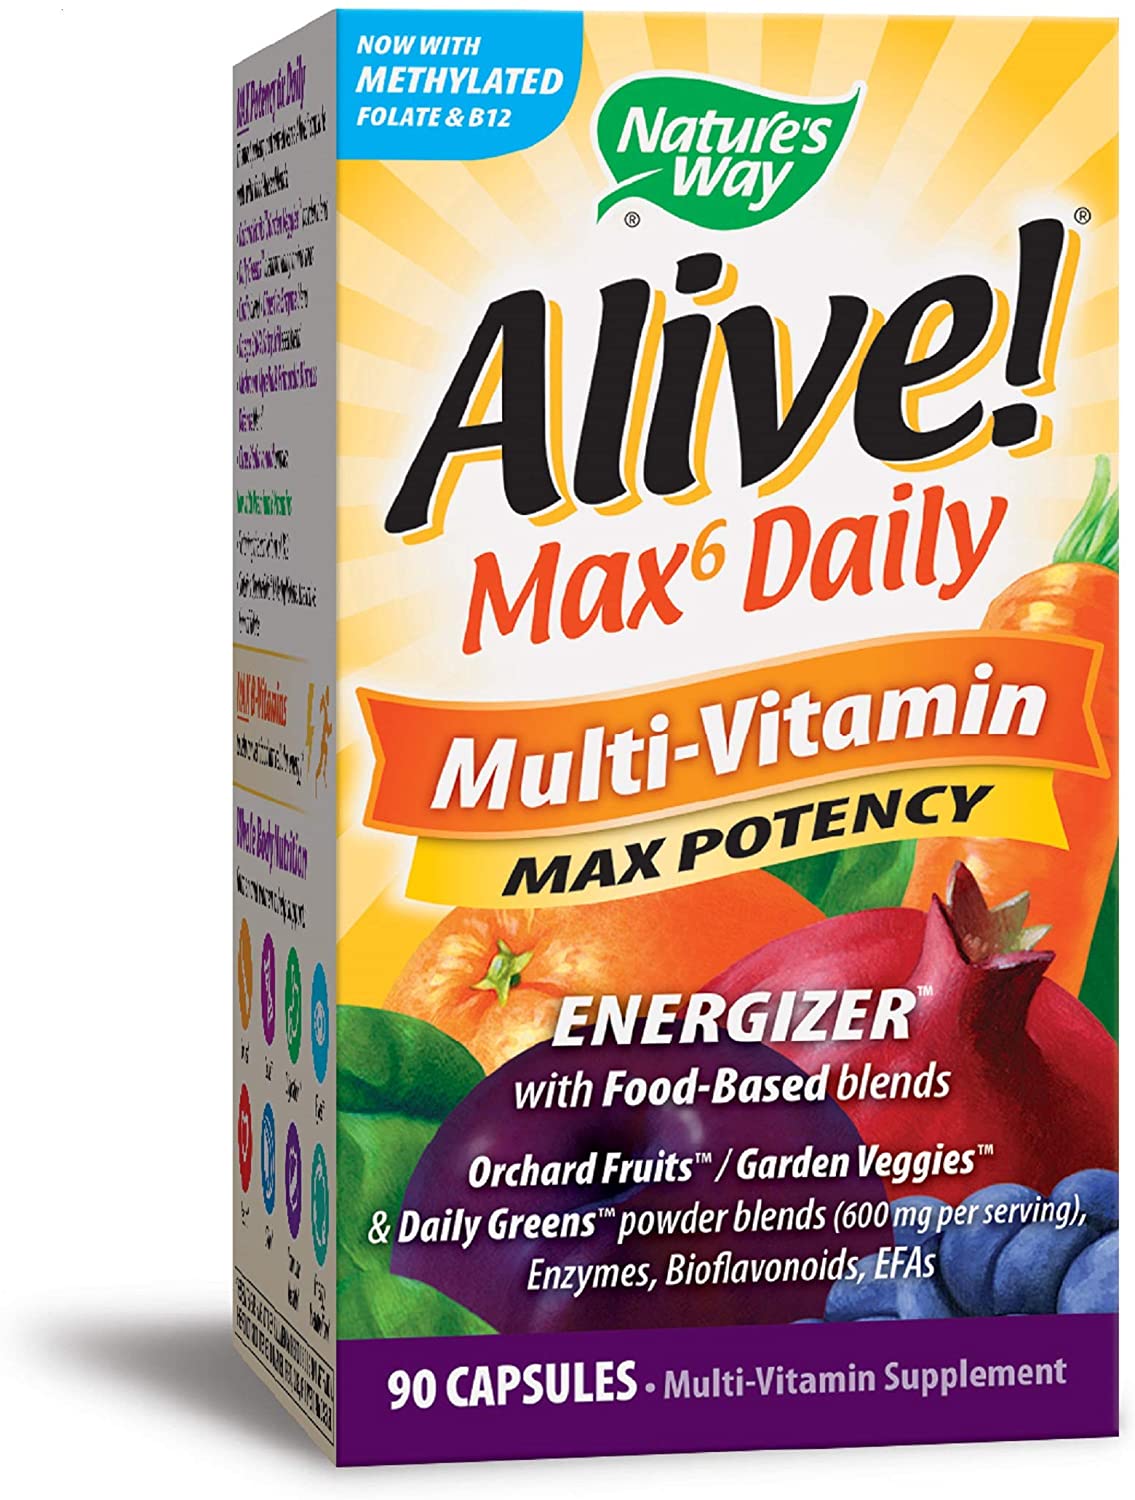 Vitamin max. Натурес Вэй Multi Vitamin Max Protency. Alive Max 3 Daily Multi-Vitamin Max Potency. Витамины Alive Multi. Nature's way, Alive Multivitamin.